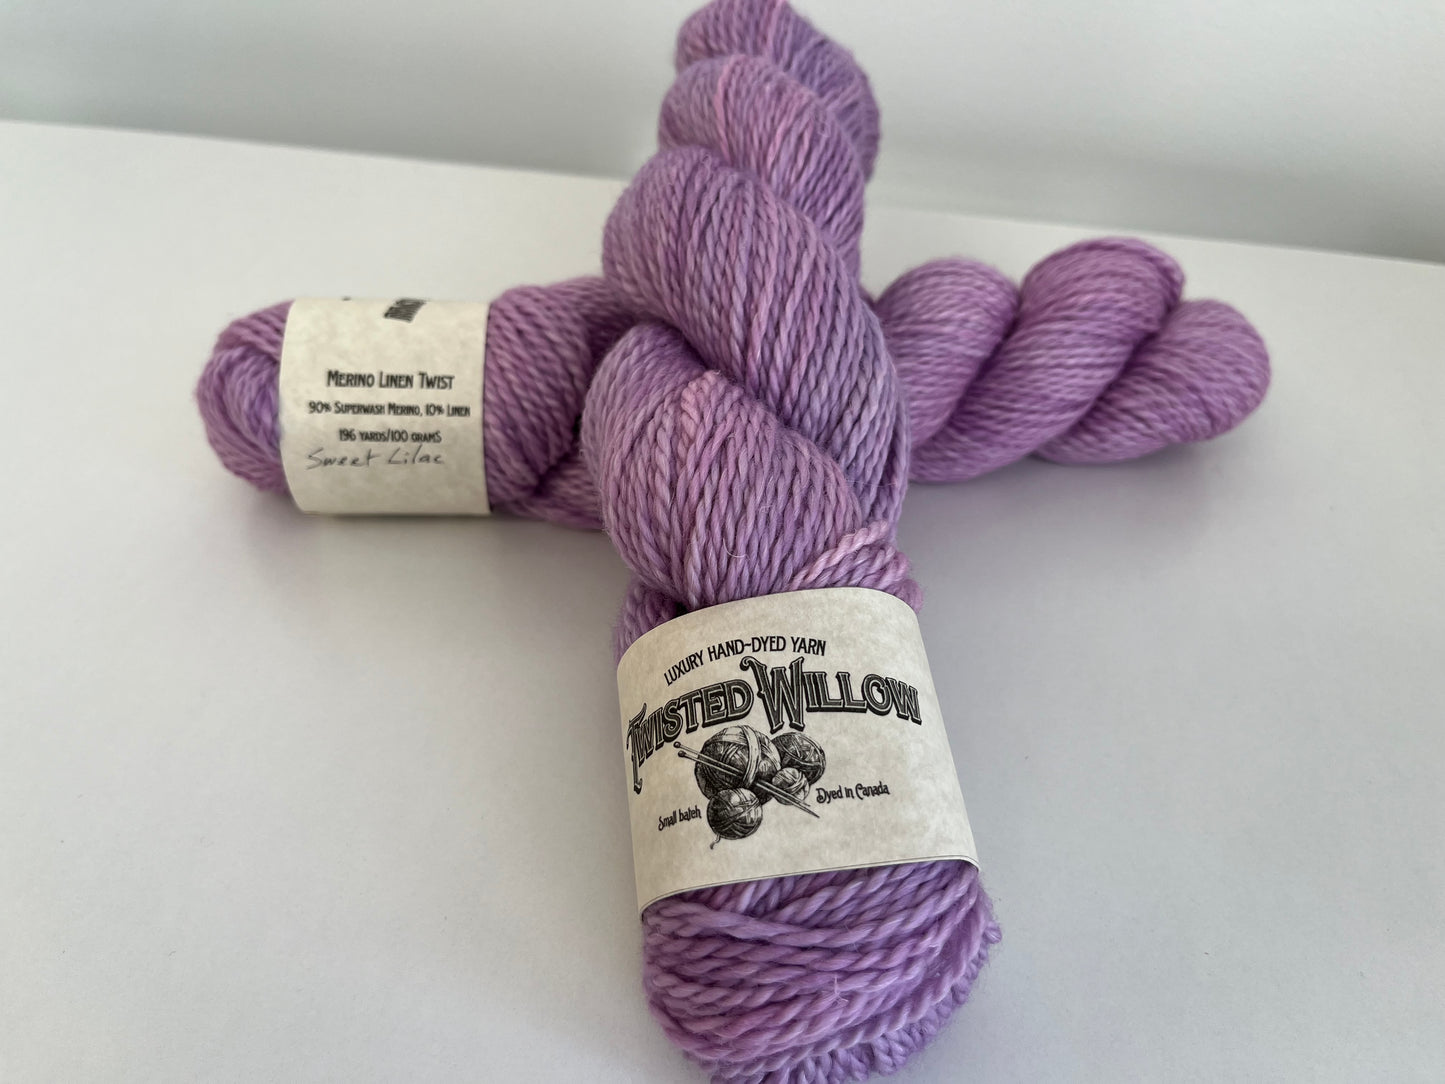 Twisted Willow Yarn; Merino Linen Twist;  Sweet Lilac